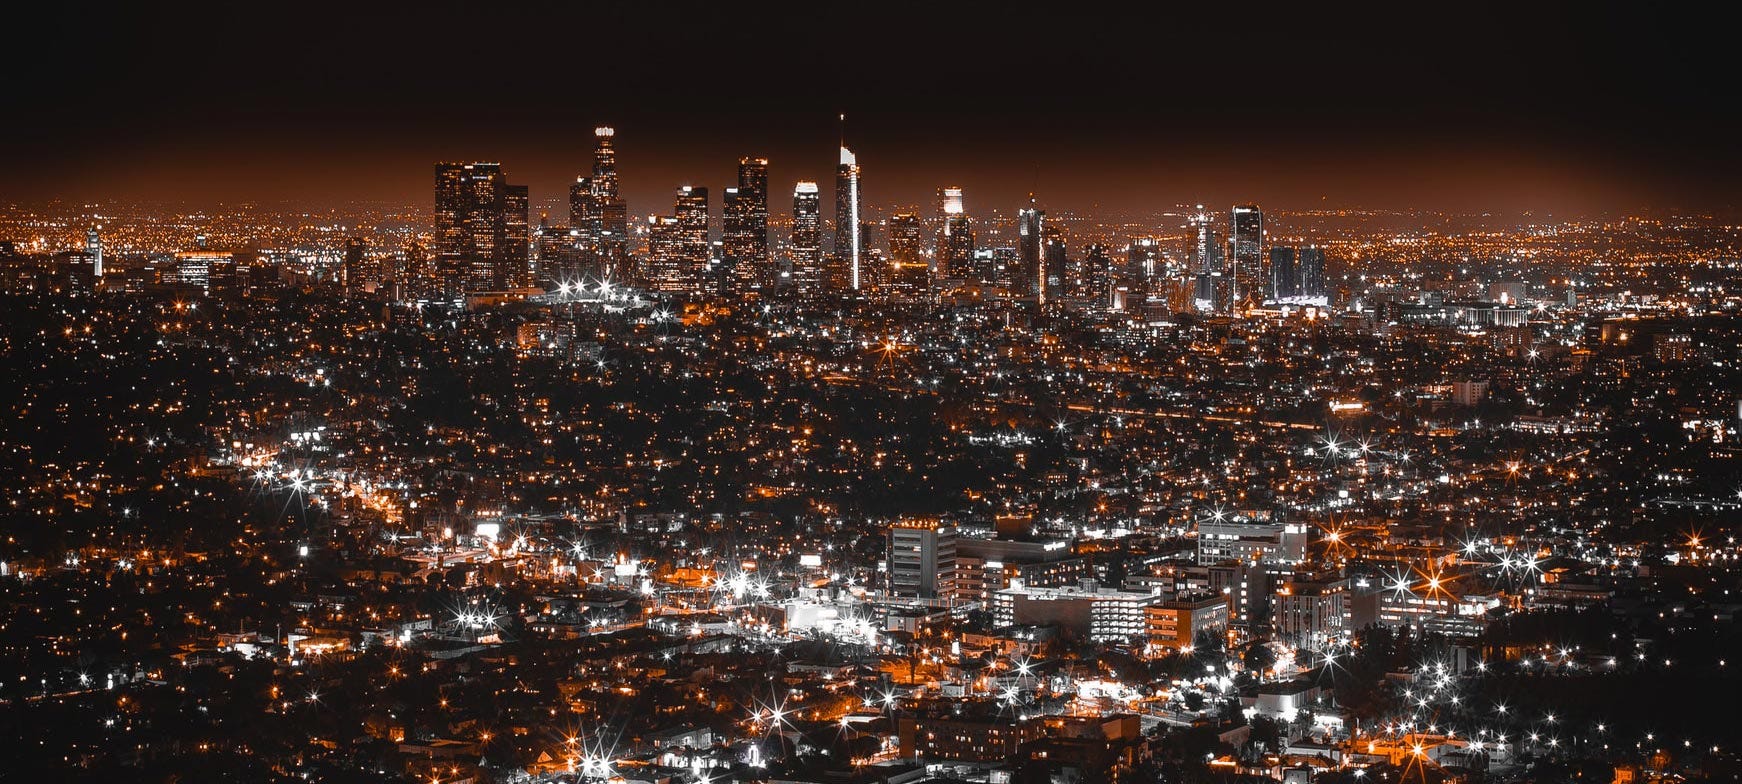 Los Angeles at night - Jim Carrey's $10 million view.